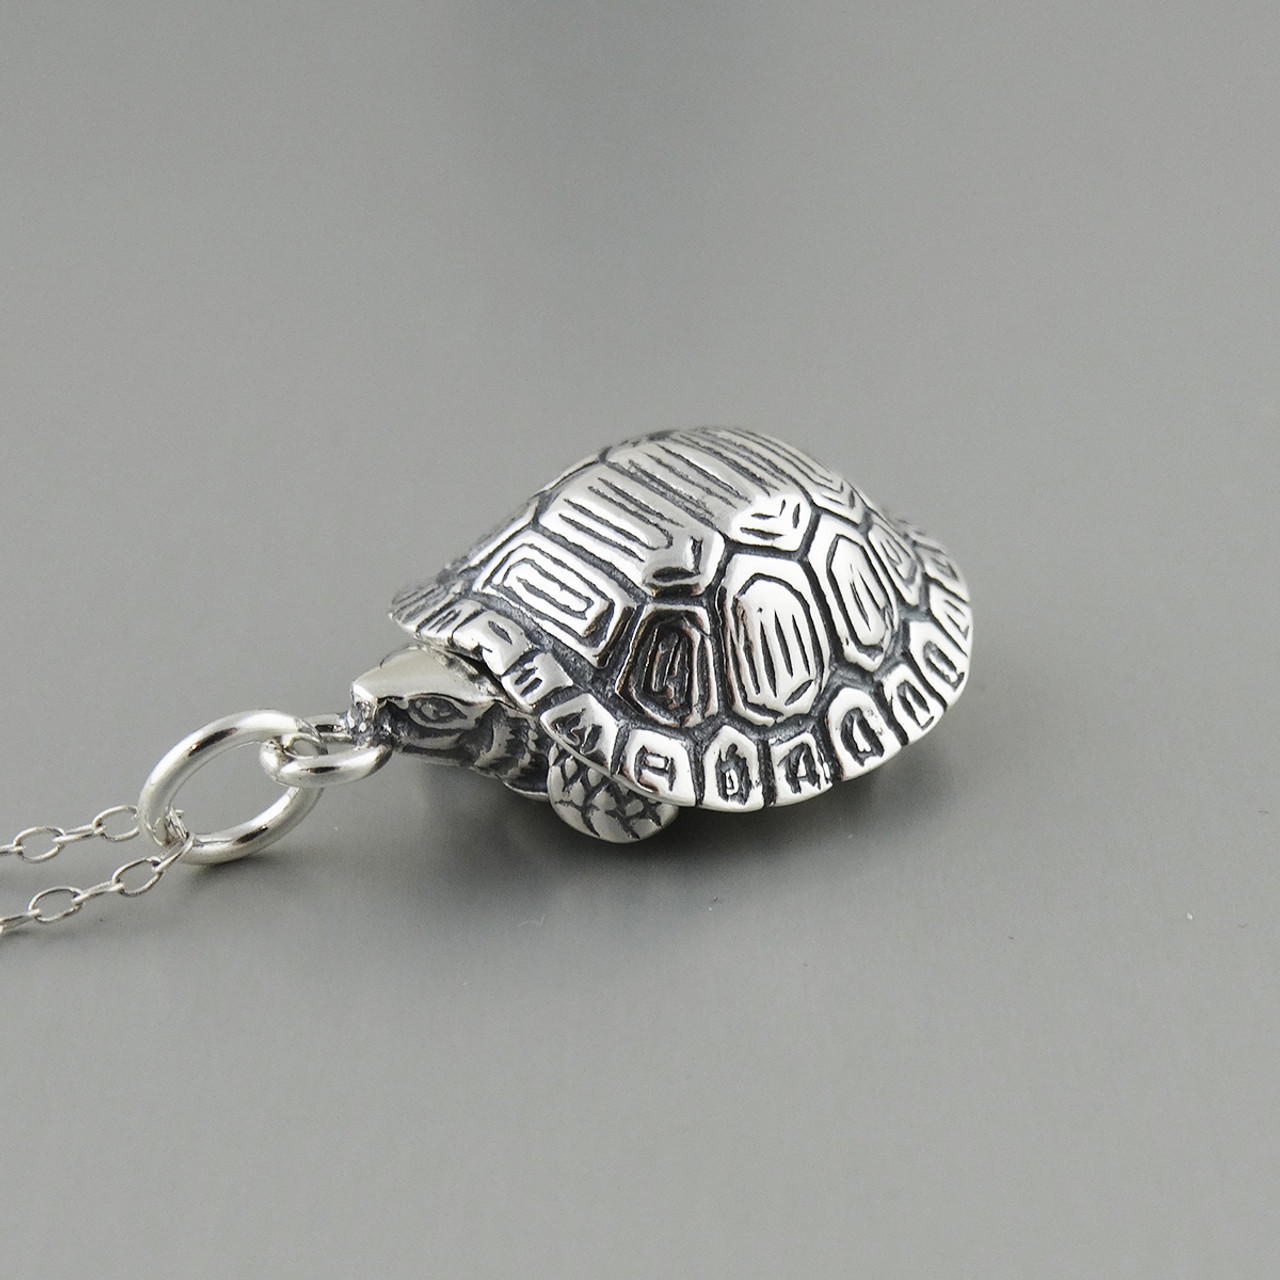 3D Turtle Poison Locket Necklace - 925 Sterling Silver - FashionJunkie4Life